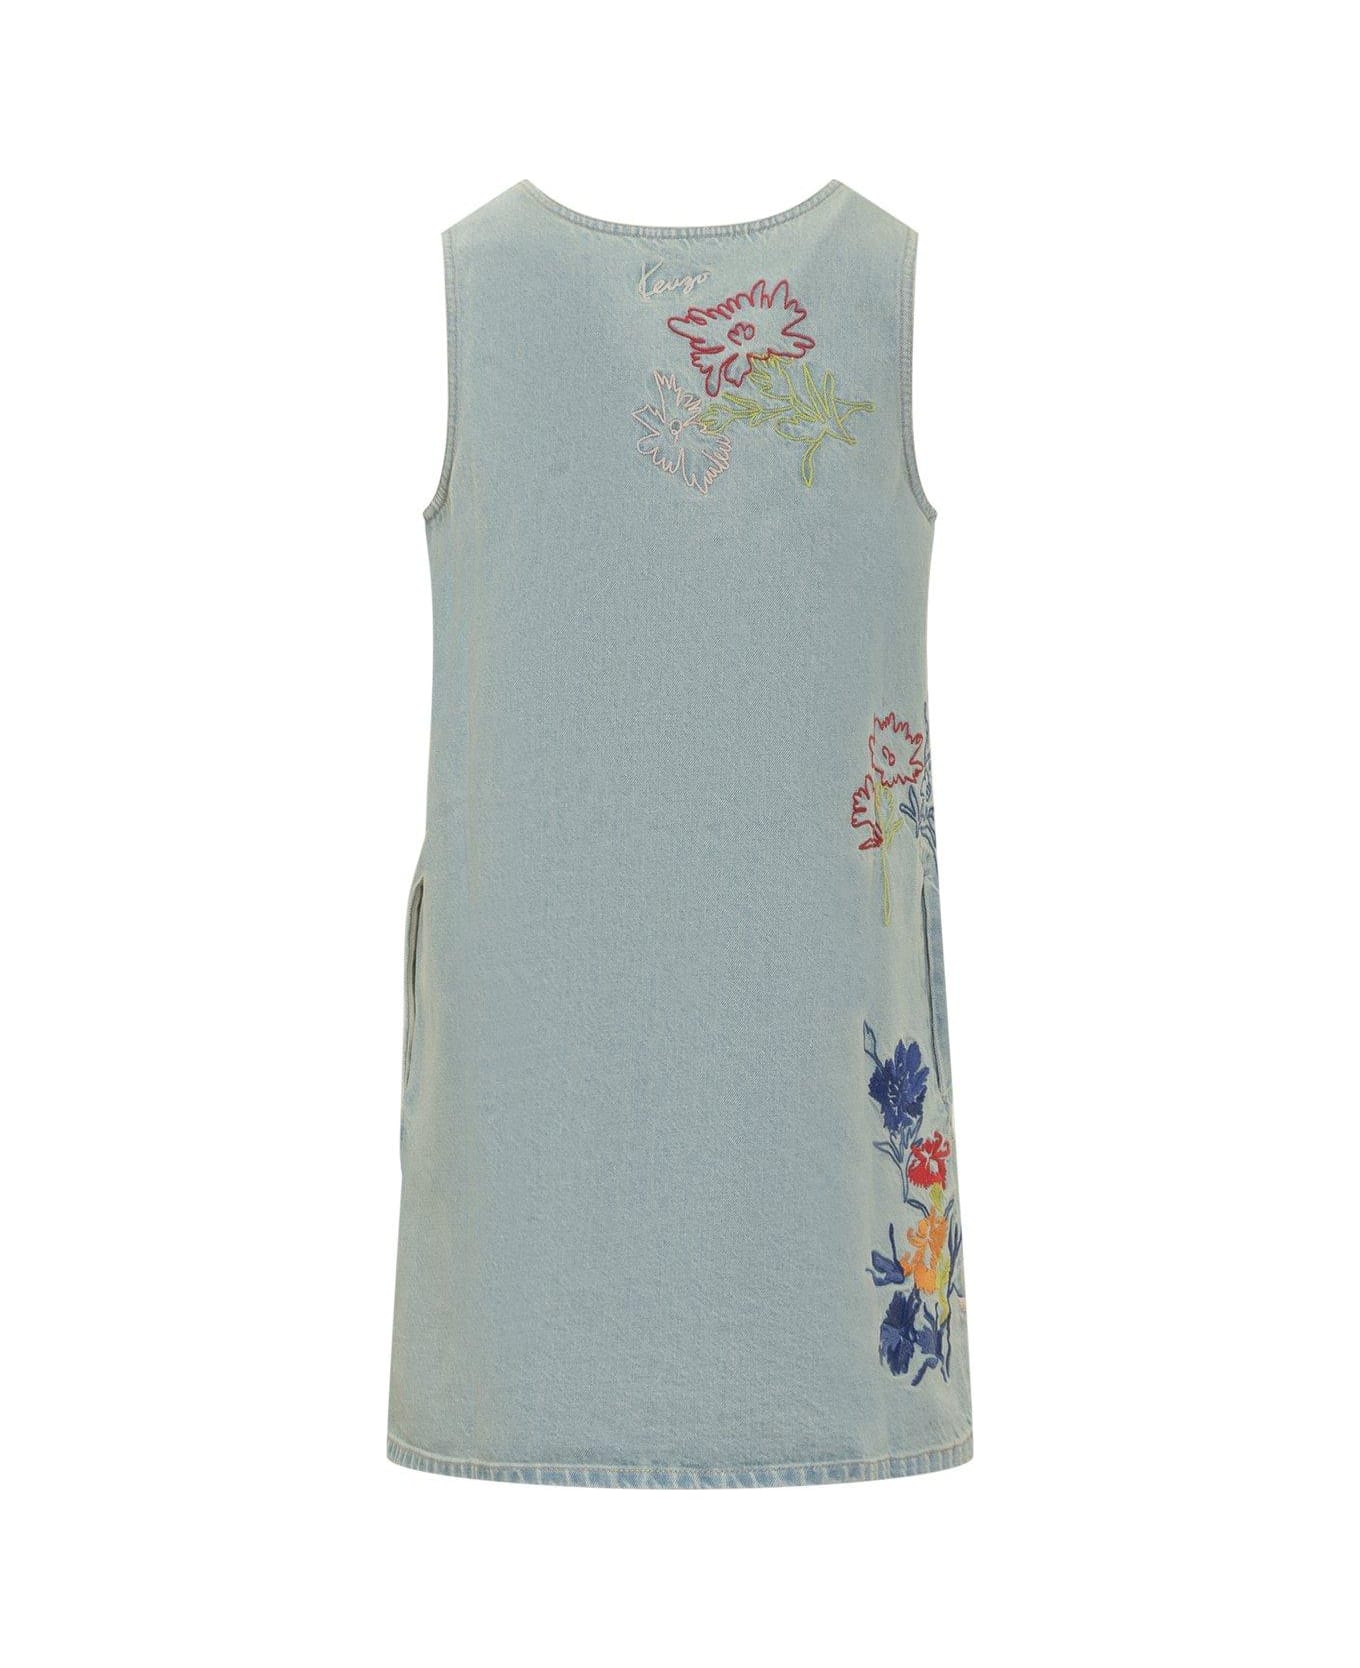 Kenzo Floral Patterned Denim Dress - STONE WASHED BLUE タンクトップ